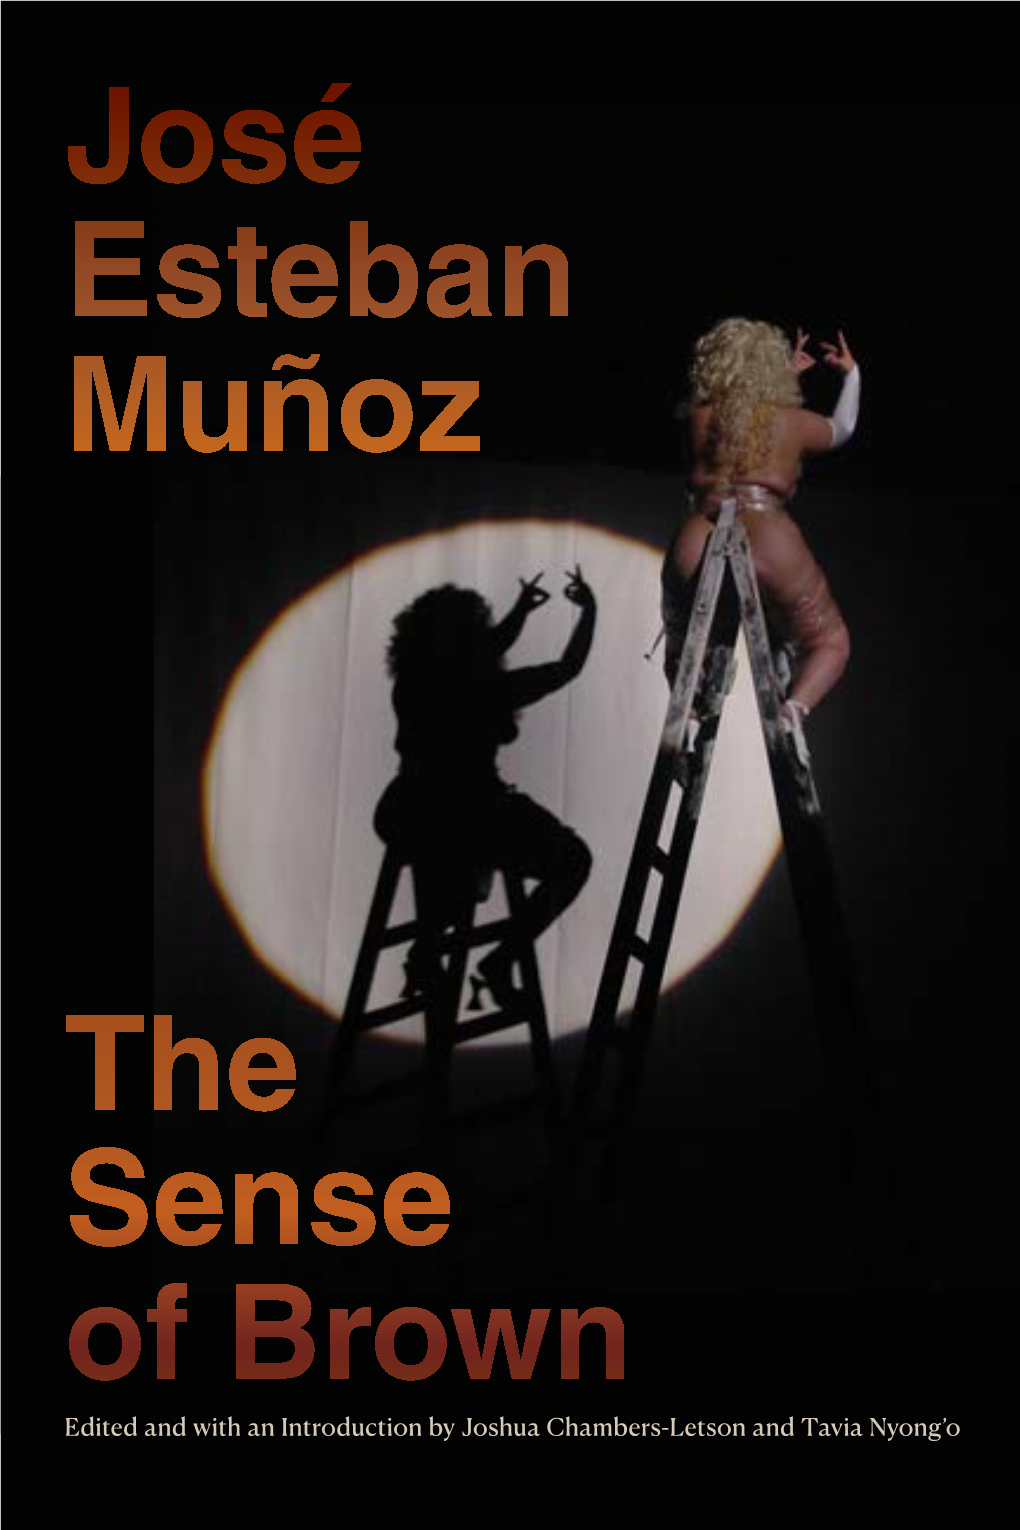 José Esteban Muñoz the Sense of Brown